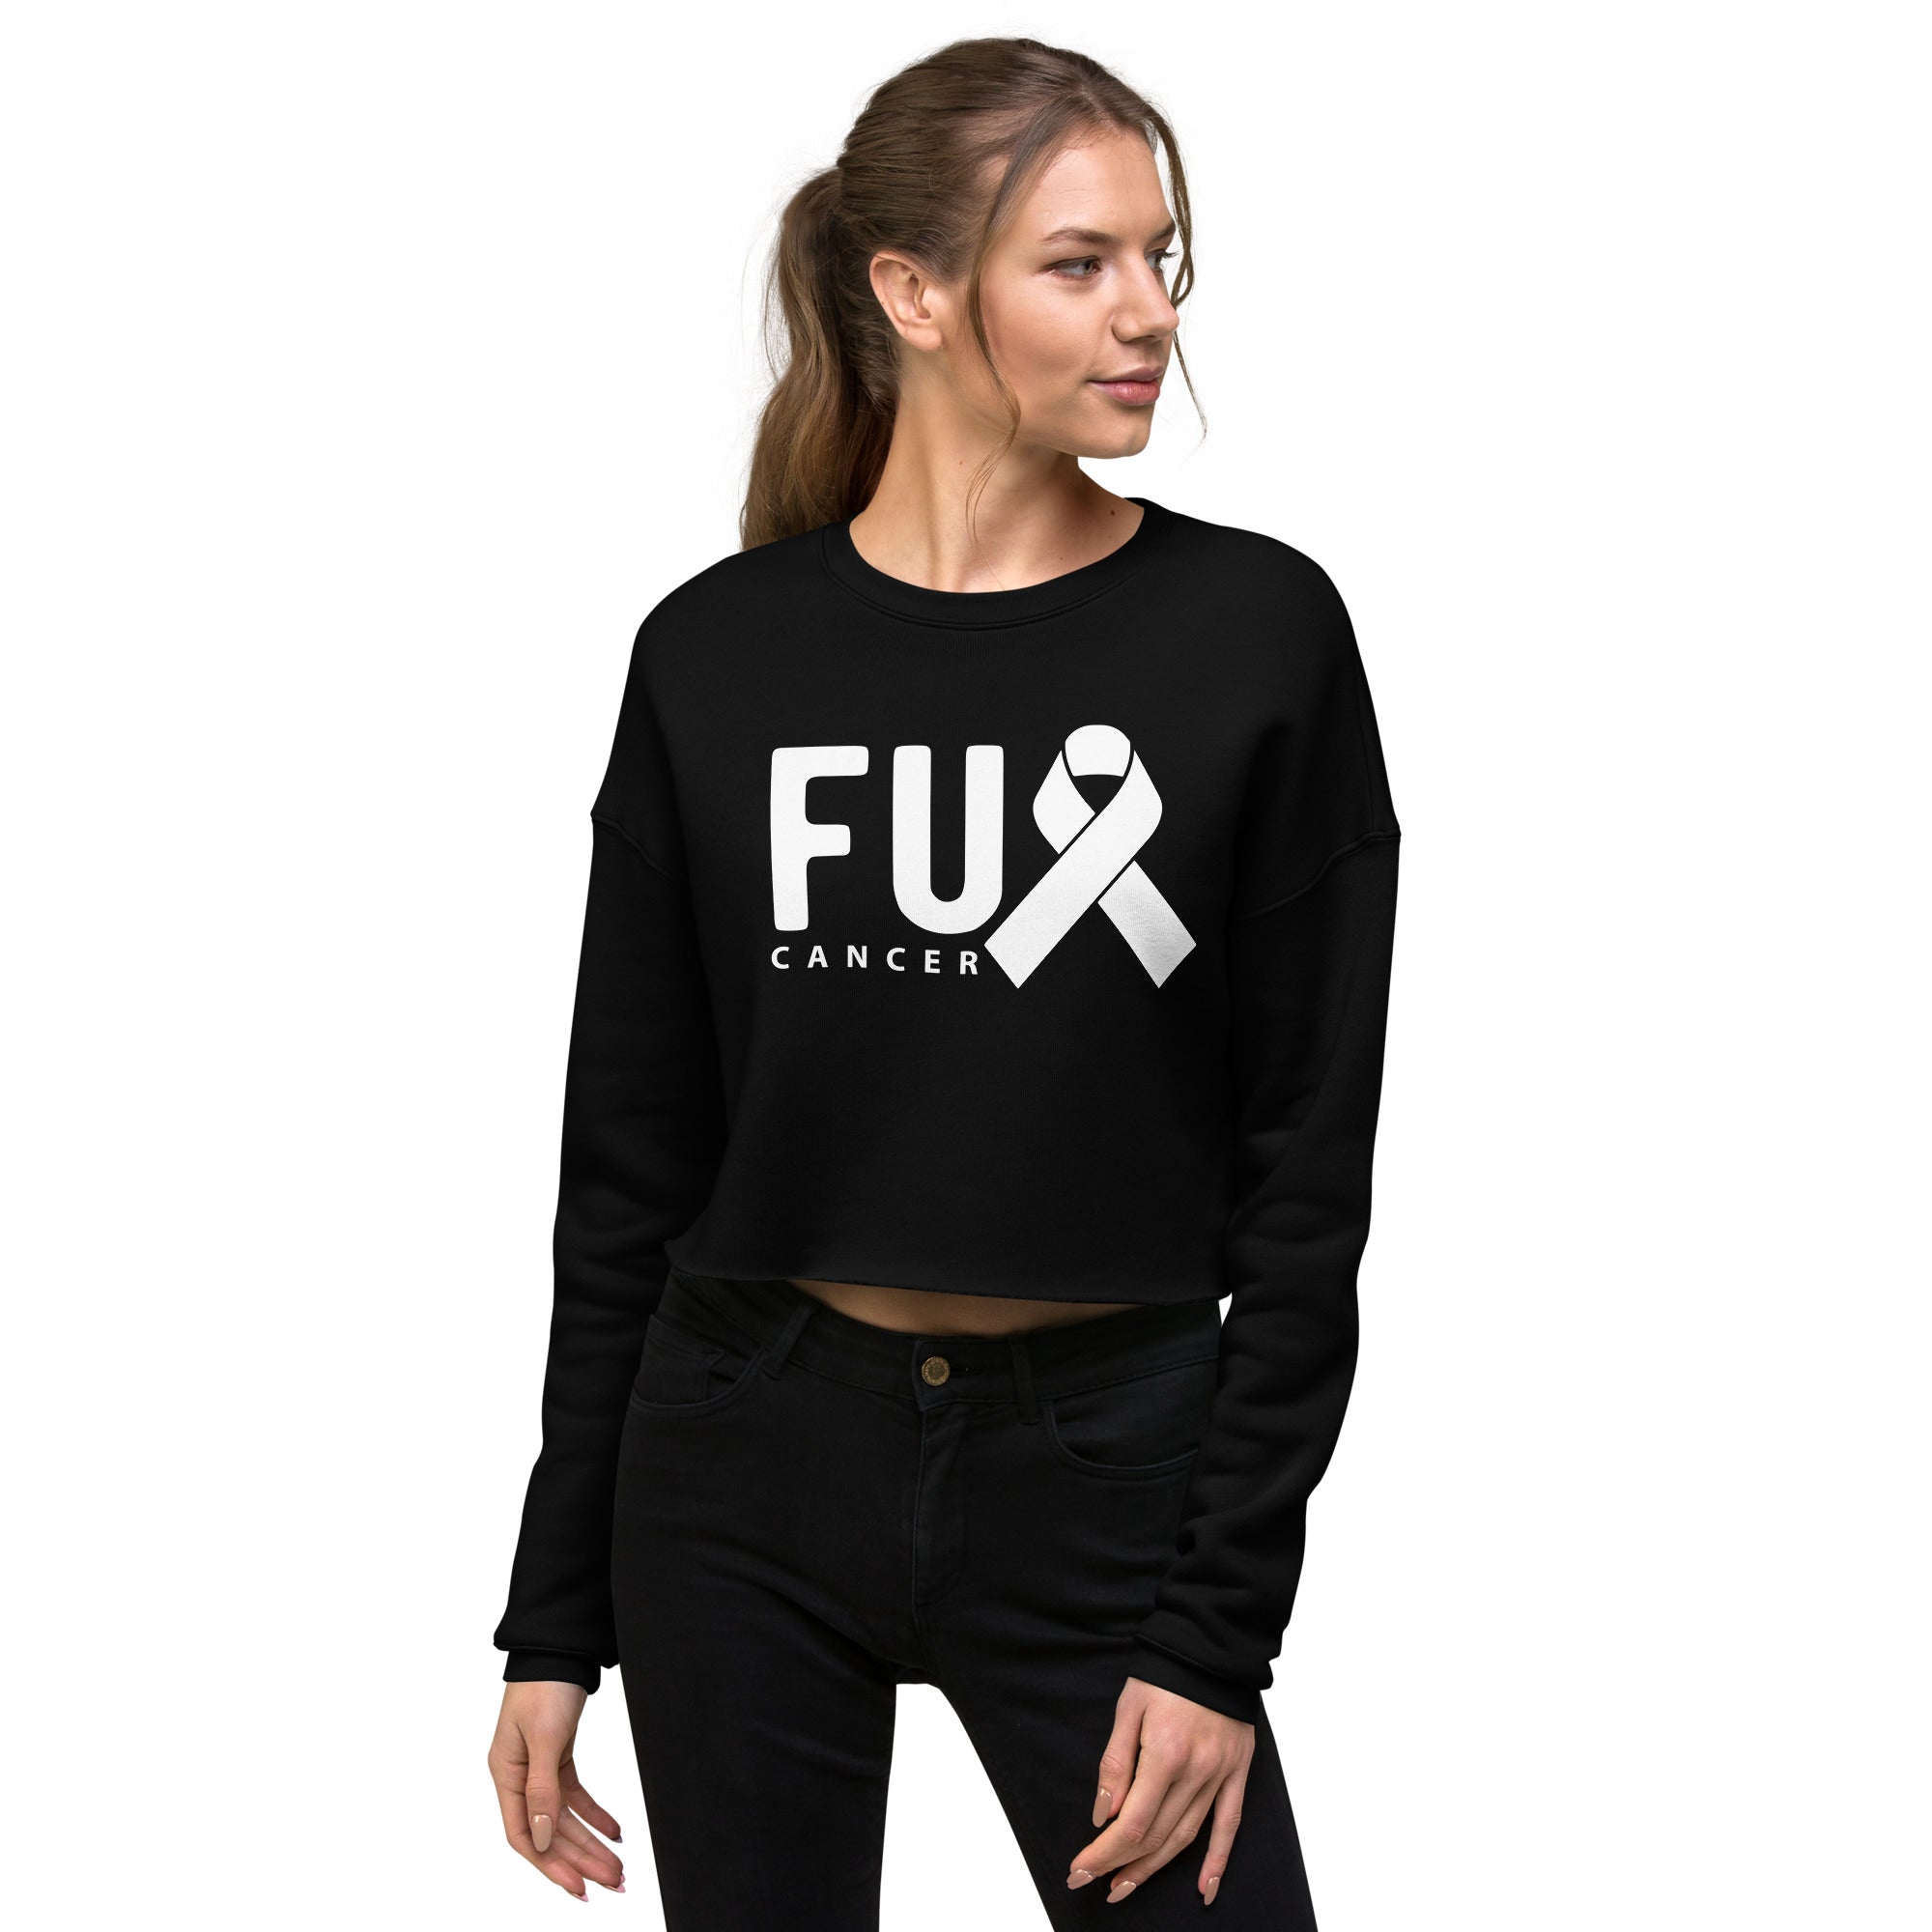 FU Cancer Crop Sweatshirt